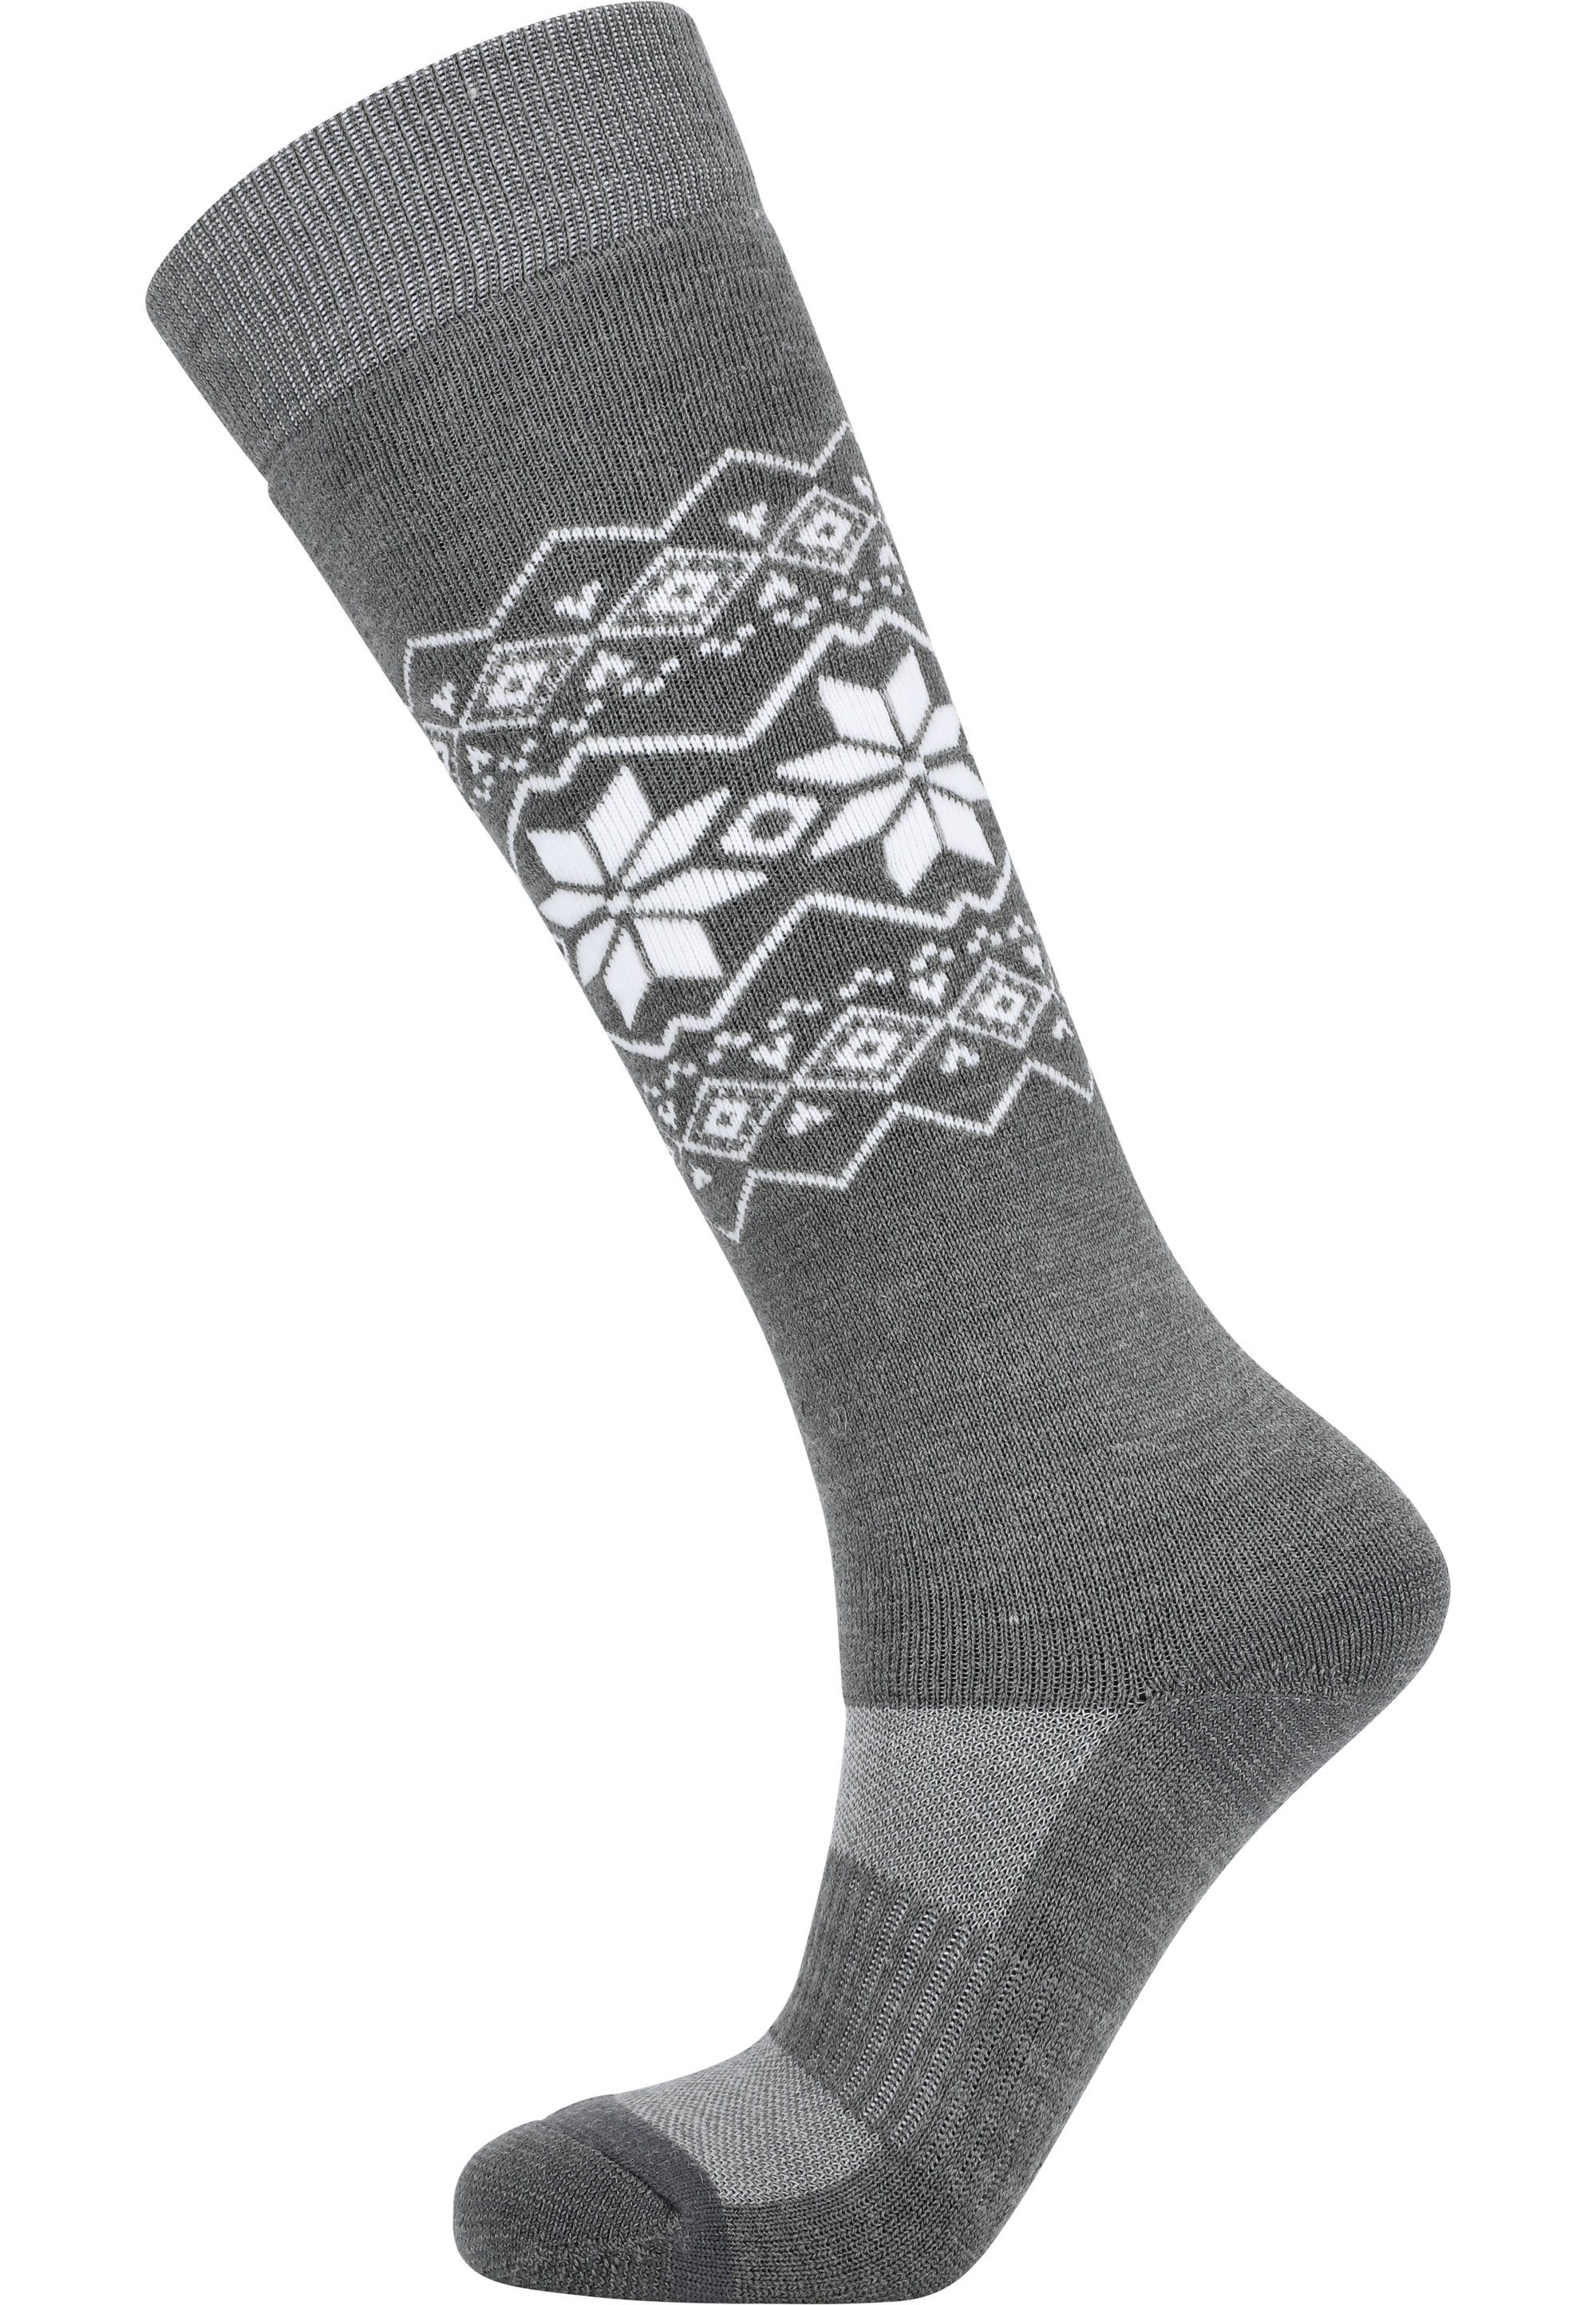 ENDURANCE Socken grau mit Jacquard-Muster Ossar (1-Paar) trendigem